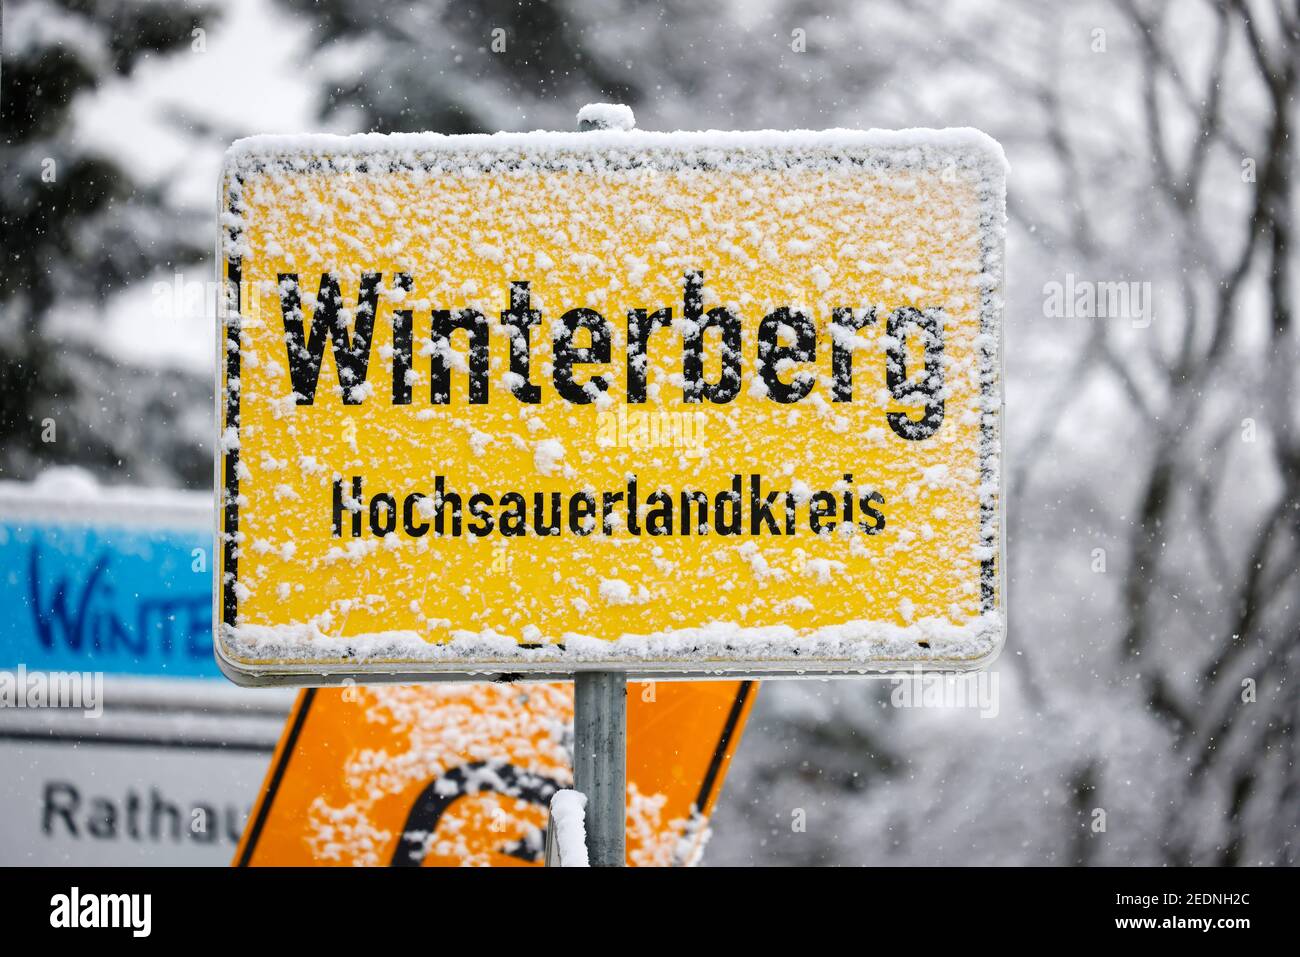 07.12.2020, Winterberg, North Rhine-Westphalia, Germany - Snow-covered Winterberg town sign, no winter sports in Winterberg in times of Corona crisis Stock Photo